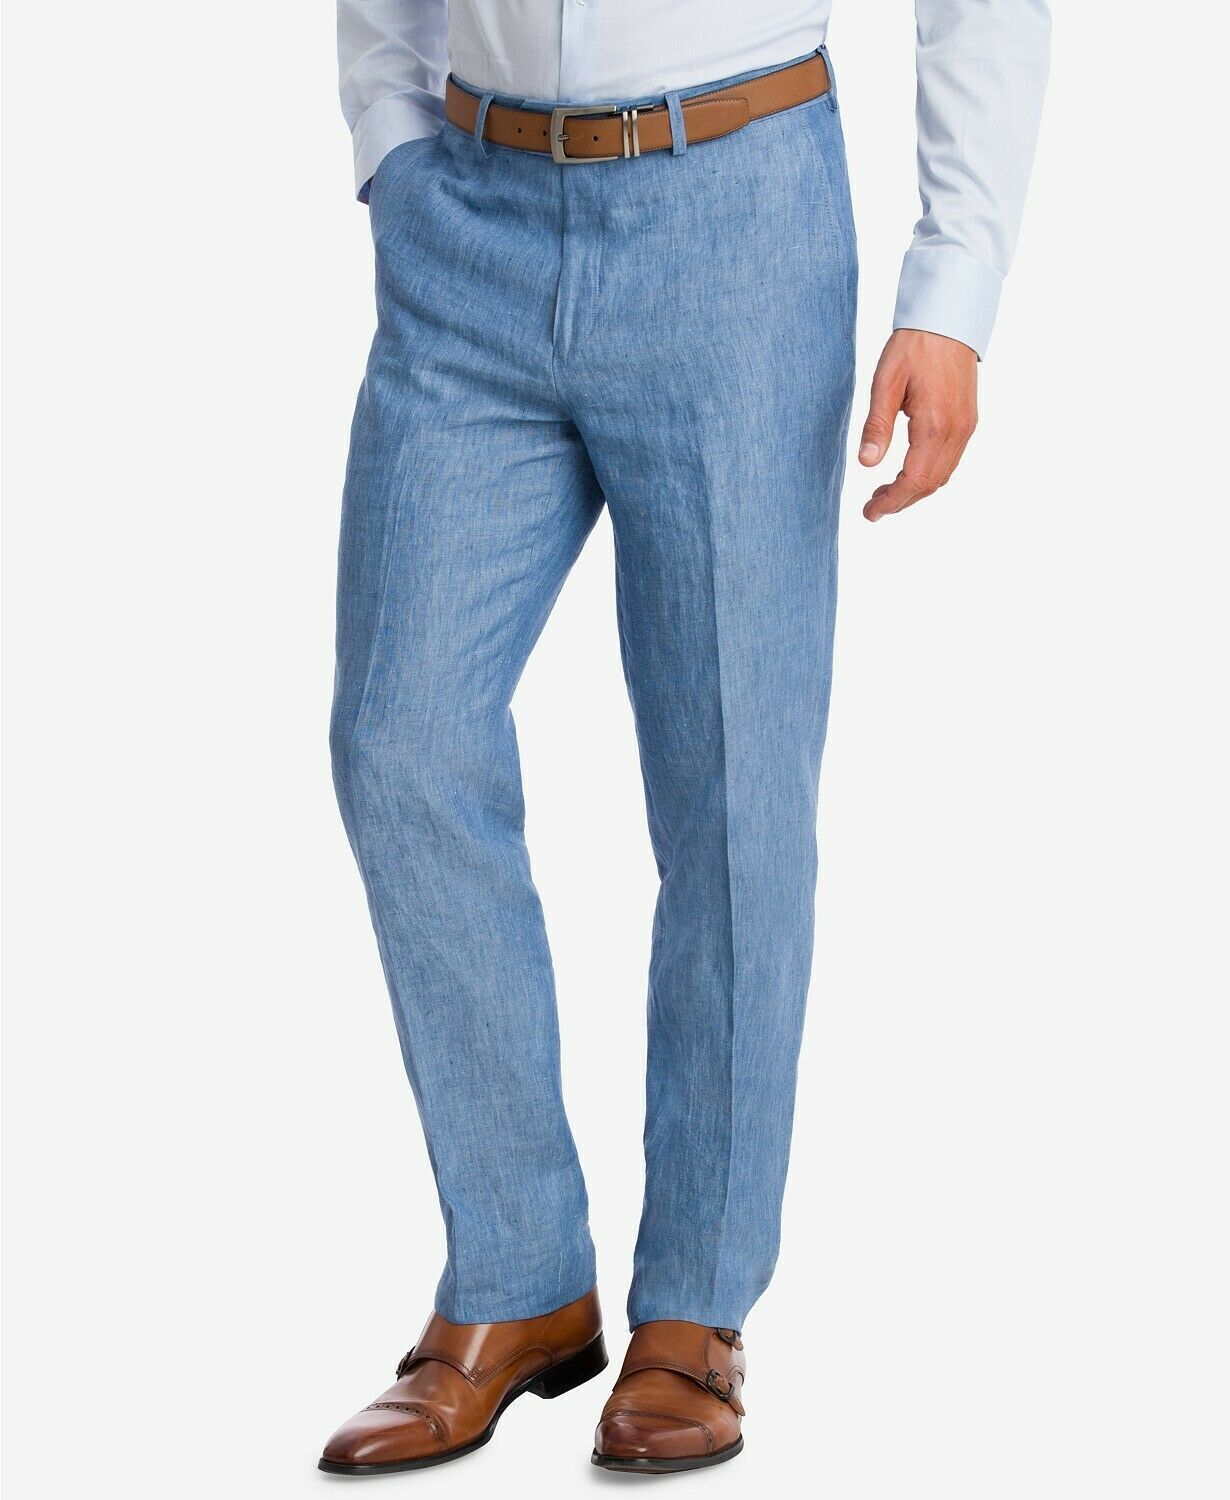 Bar III Men's  LINEN Dress Pants 30 x 30 Slim-Fit Blue Chambray